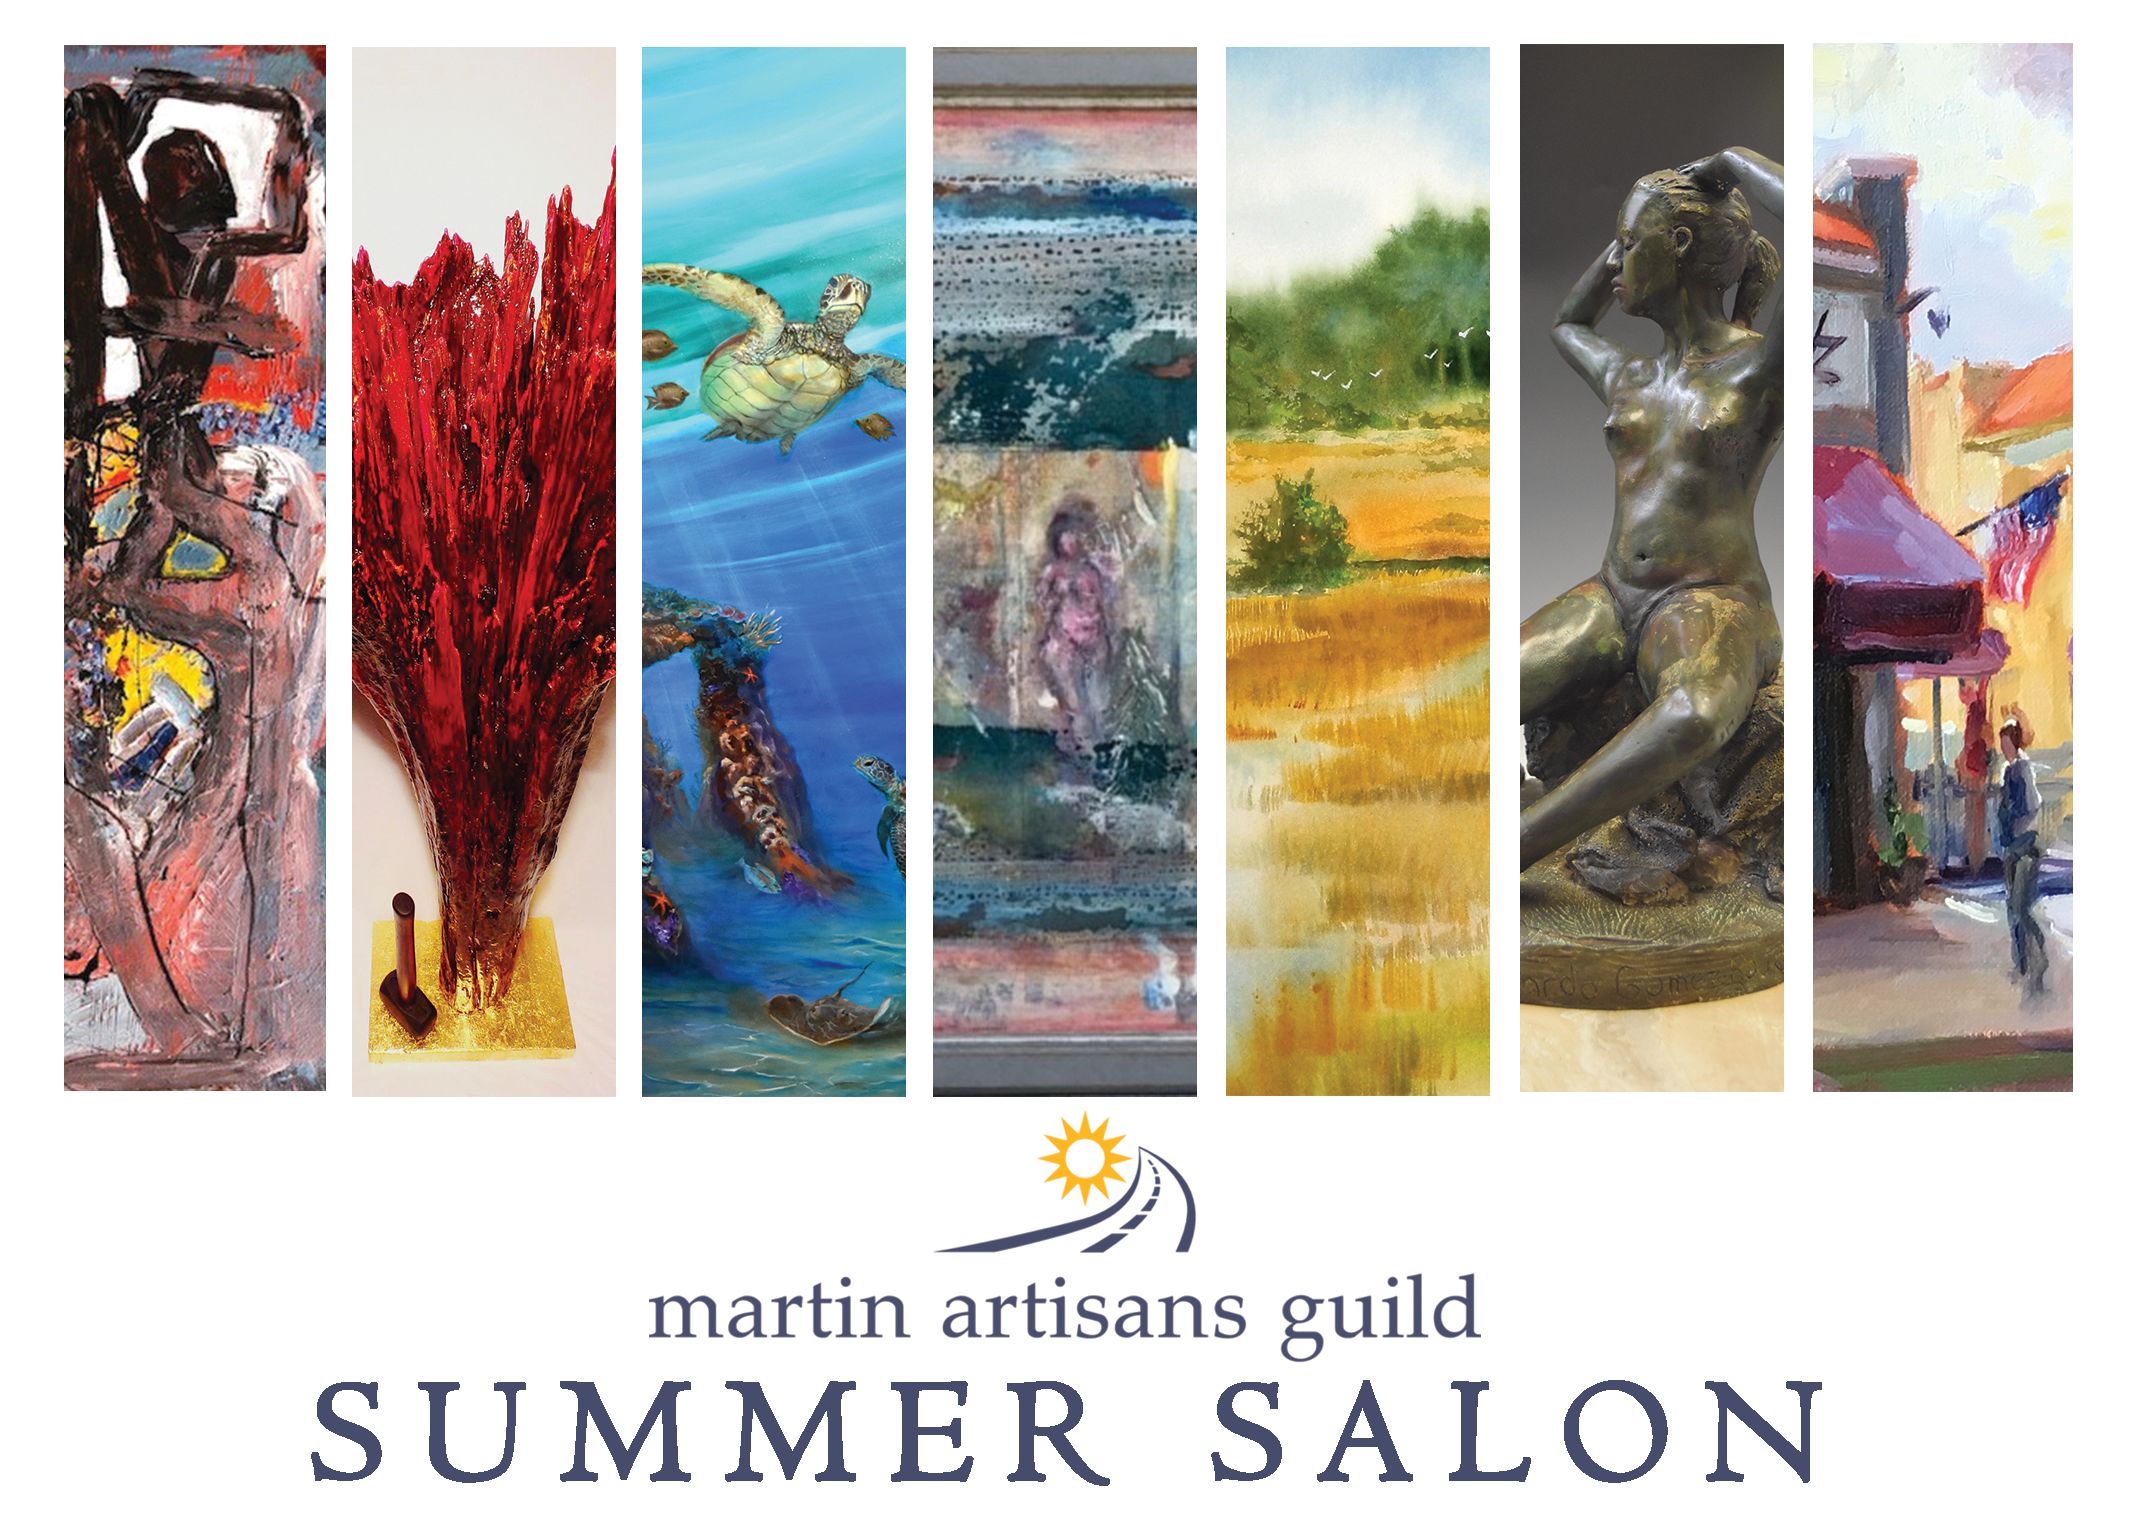 Martin Artisans Guild Summer Salon